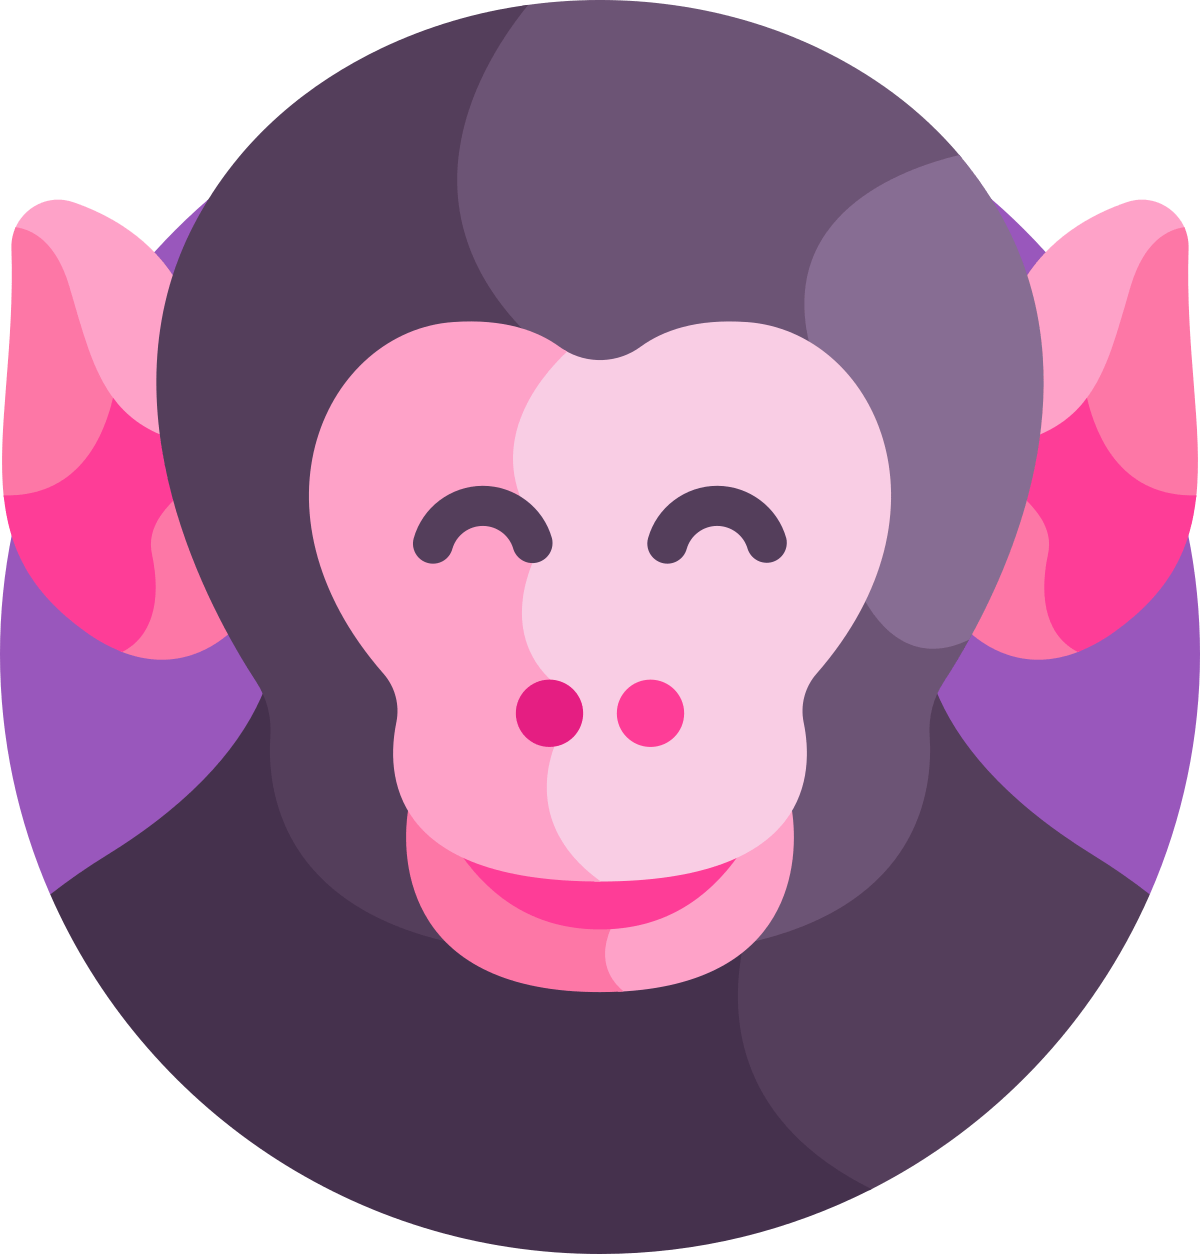 The Chinese horoscope for Monkey